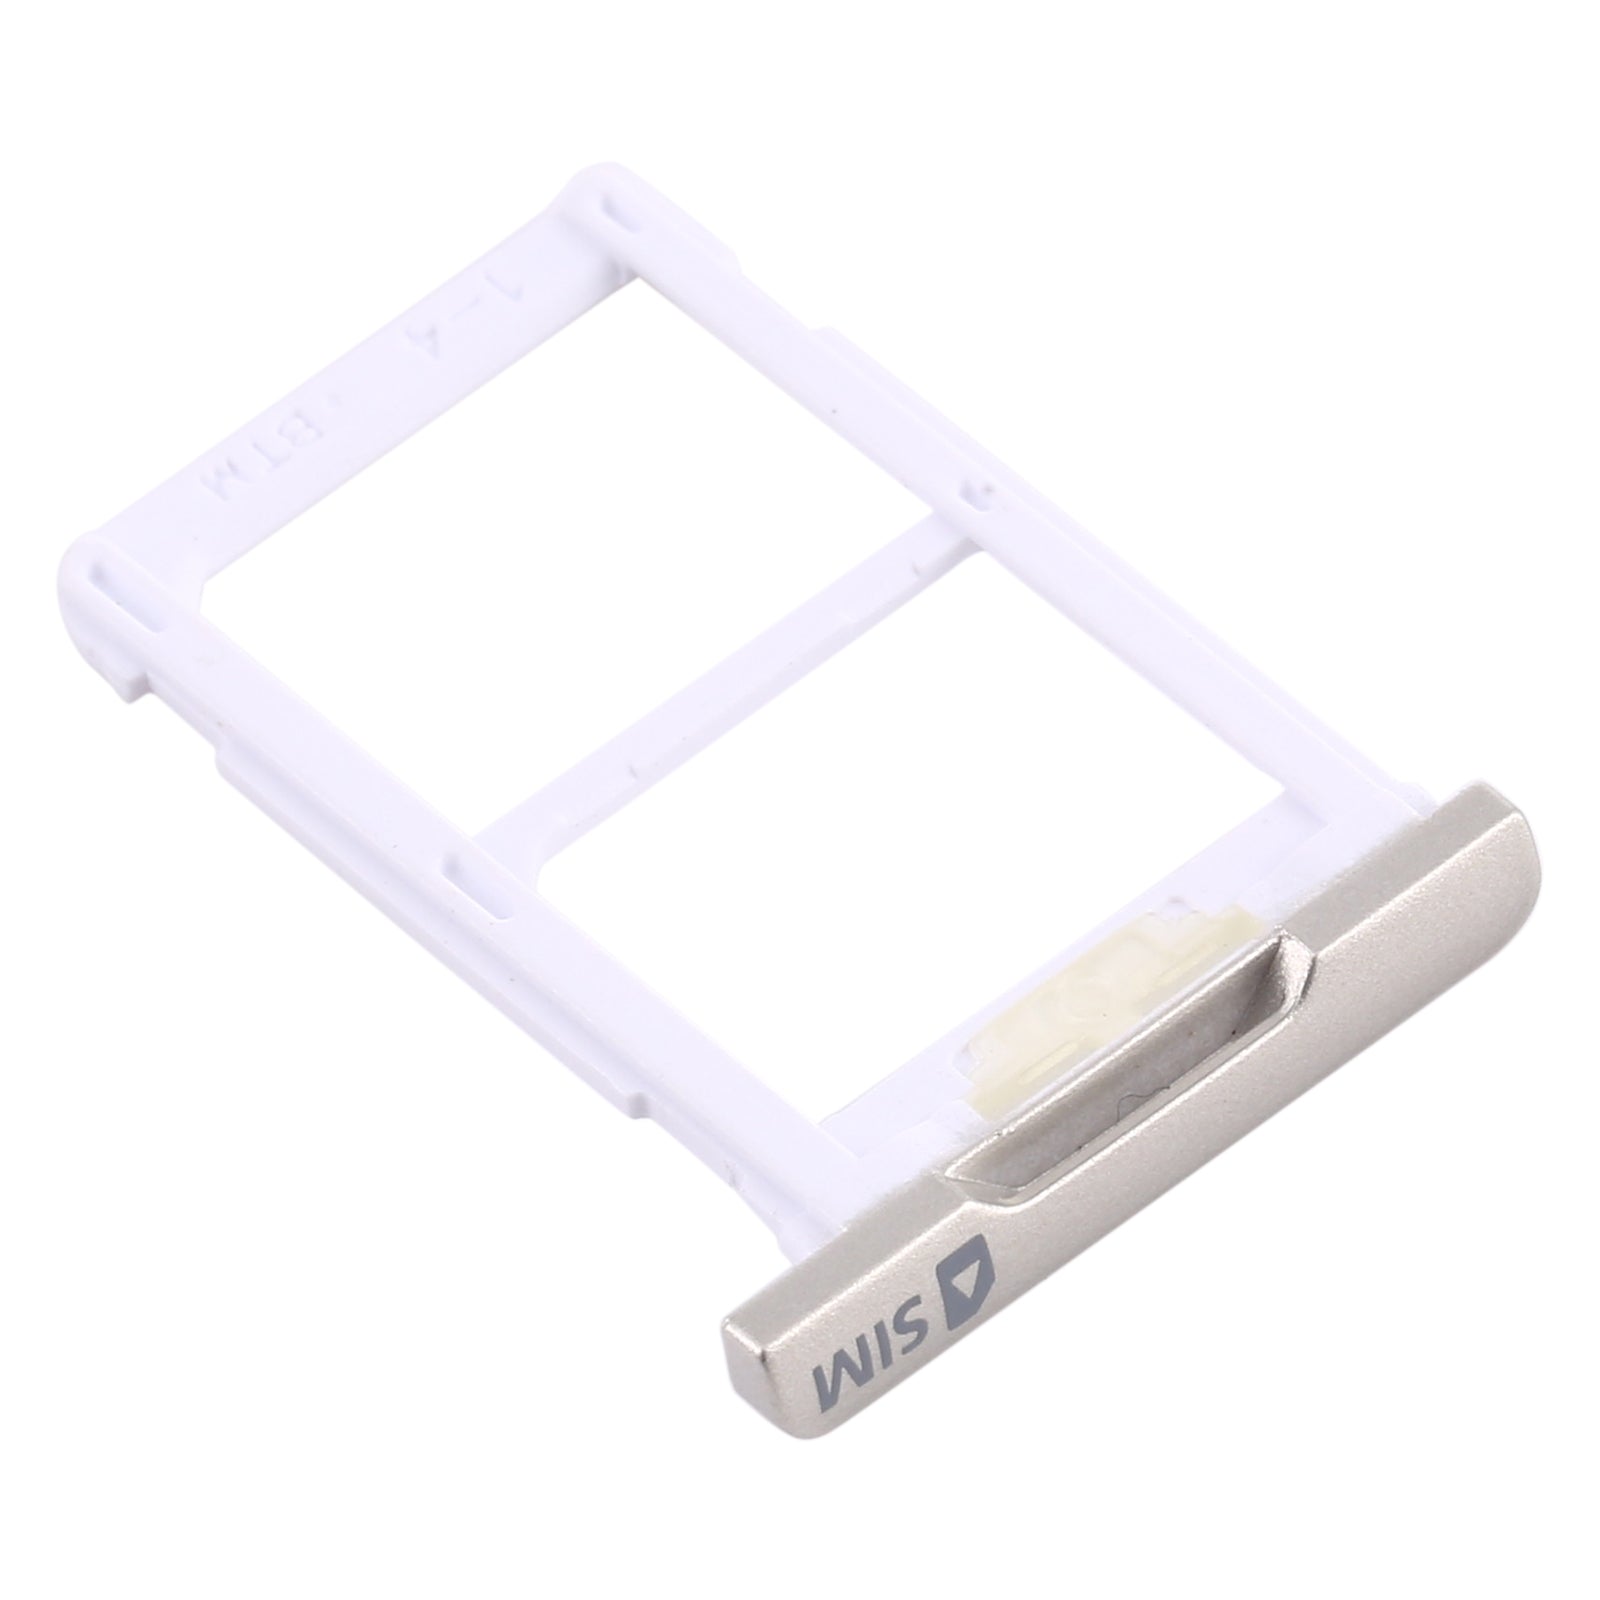 Dual SIM SIM Holder Tray Samsung Galaxy Tab A 7.0 2016 T285 White